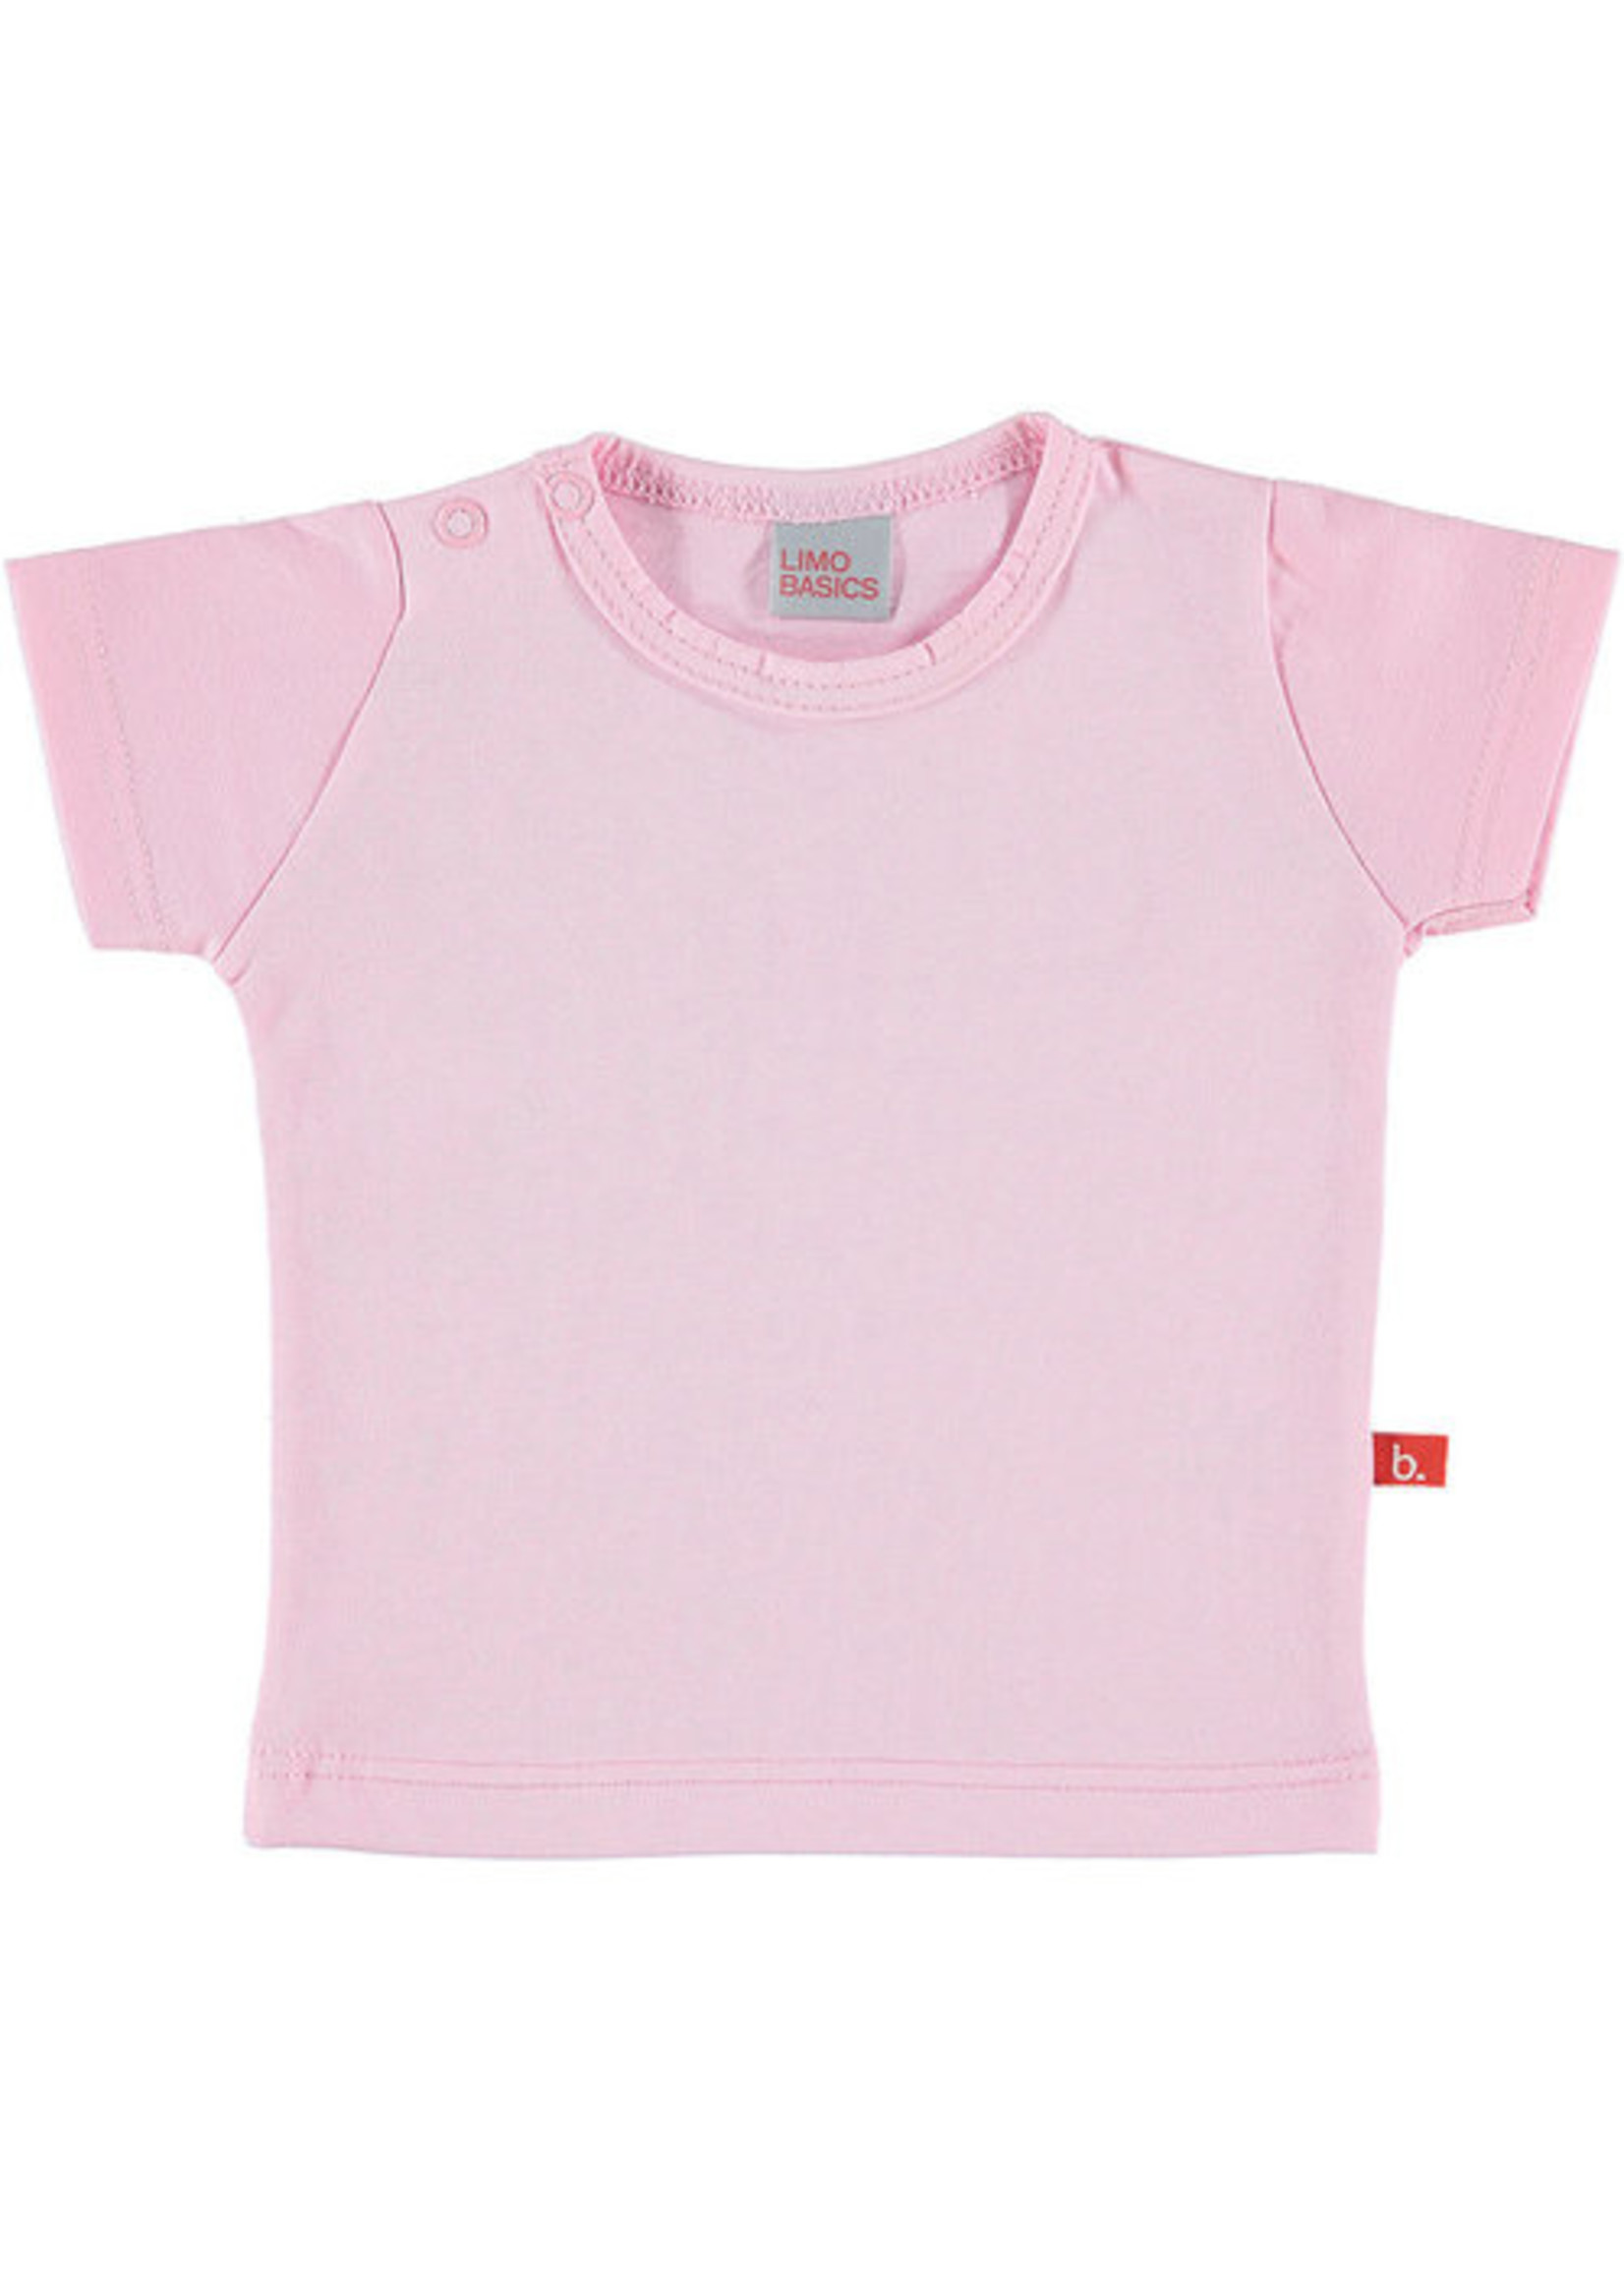 Limo basics T shirt organic cotton pink 74-80